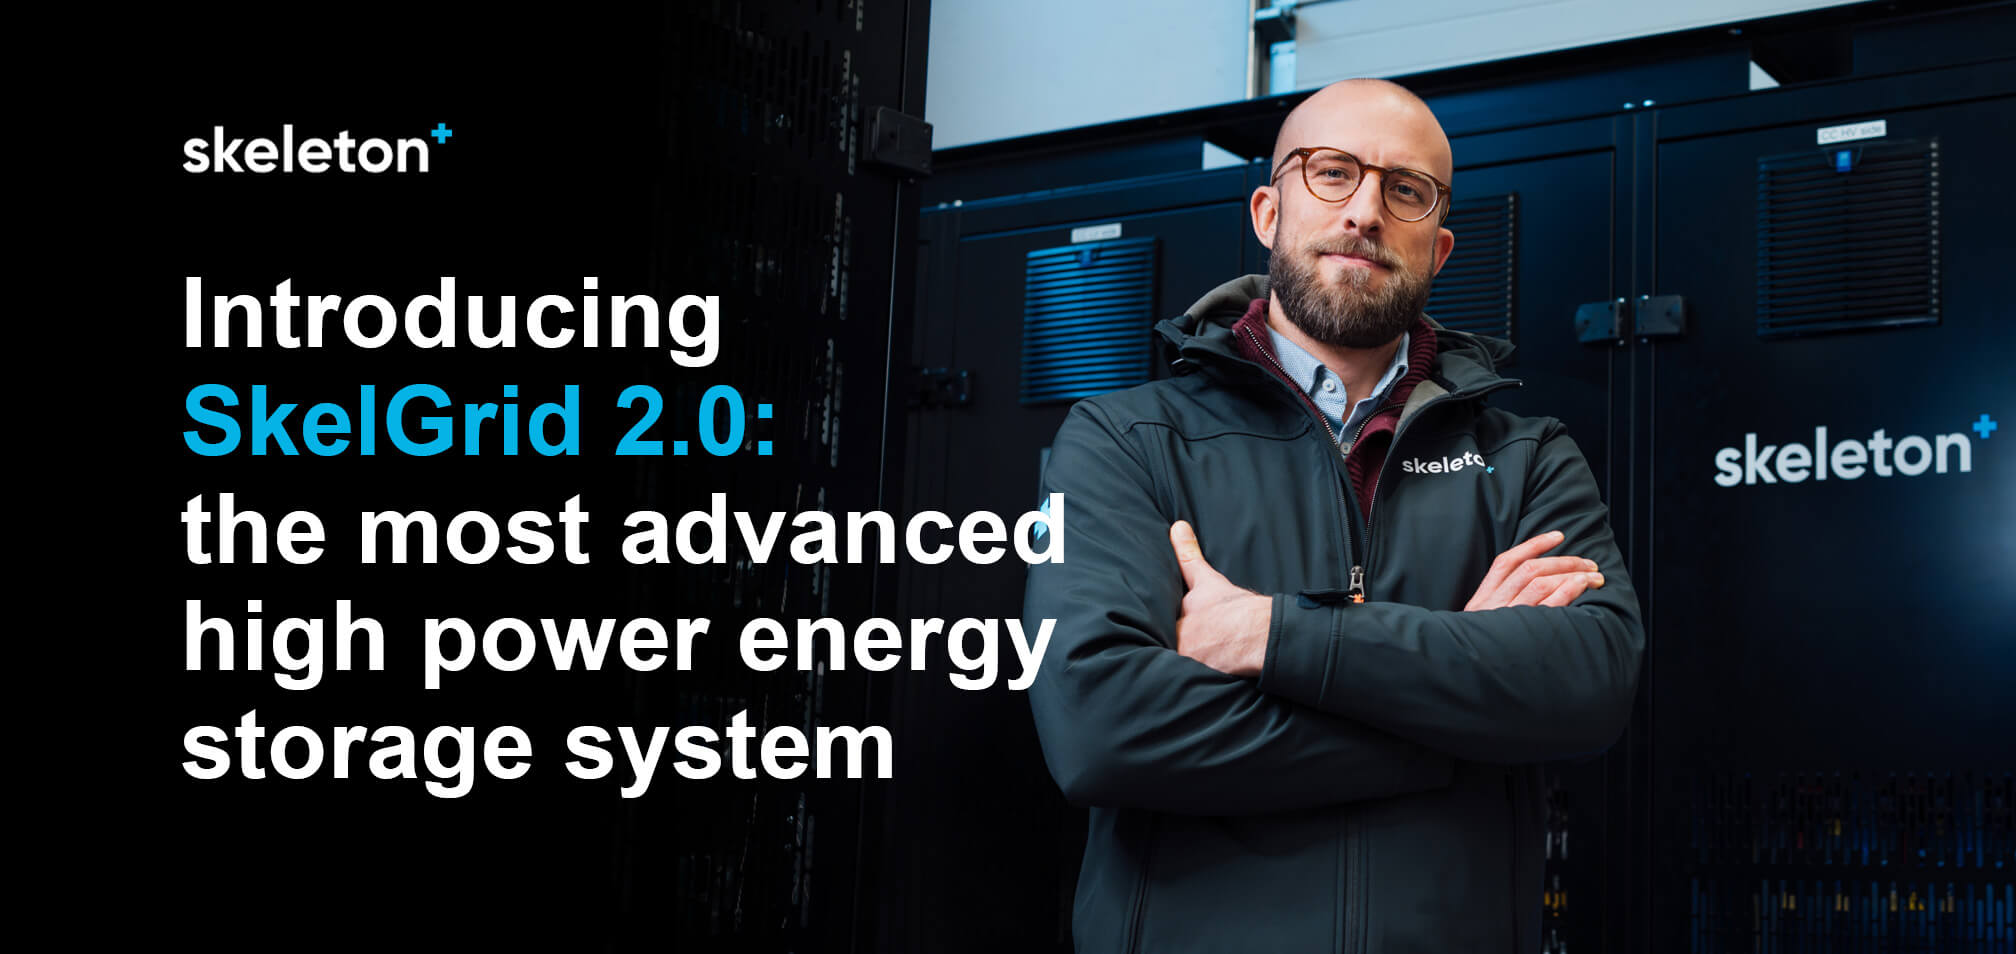 SkelGrid energy storage system uses Skeleton's high-performance supercapacitors